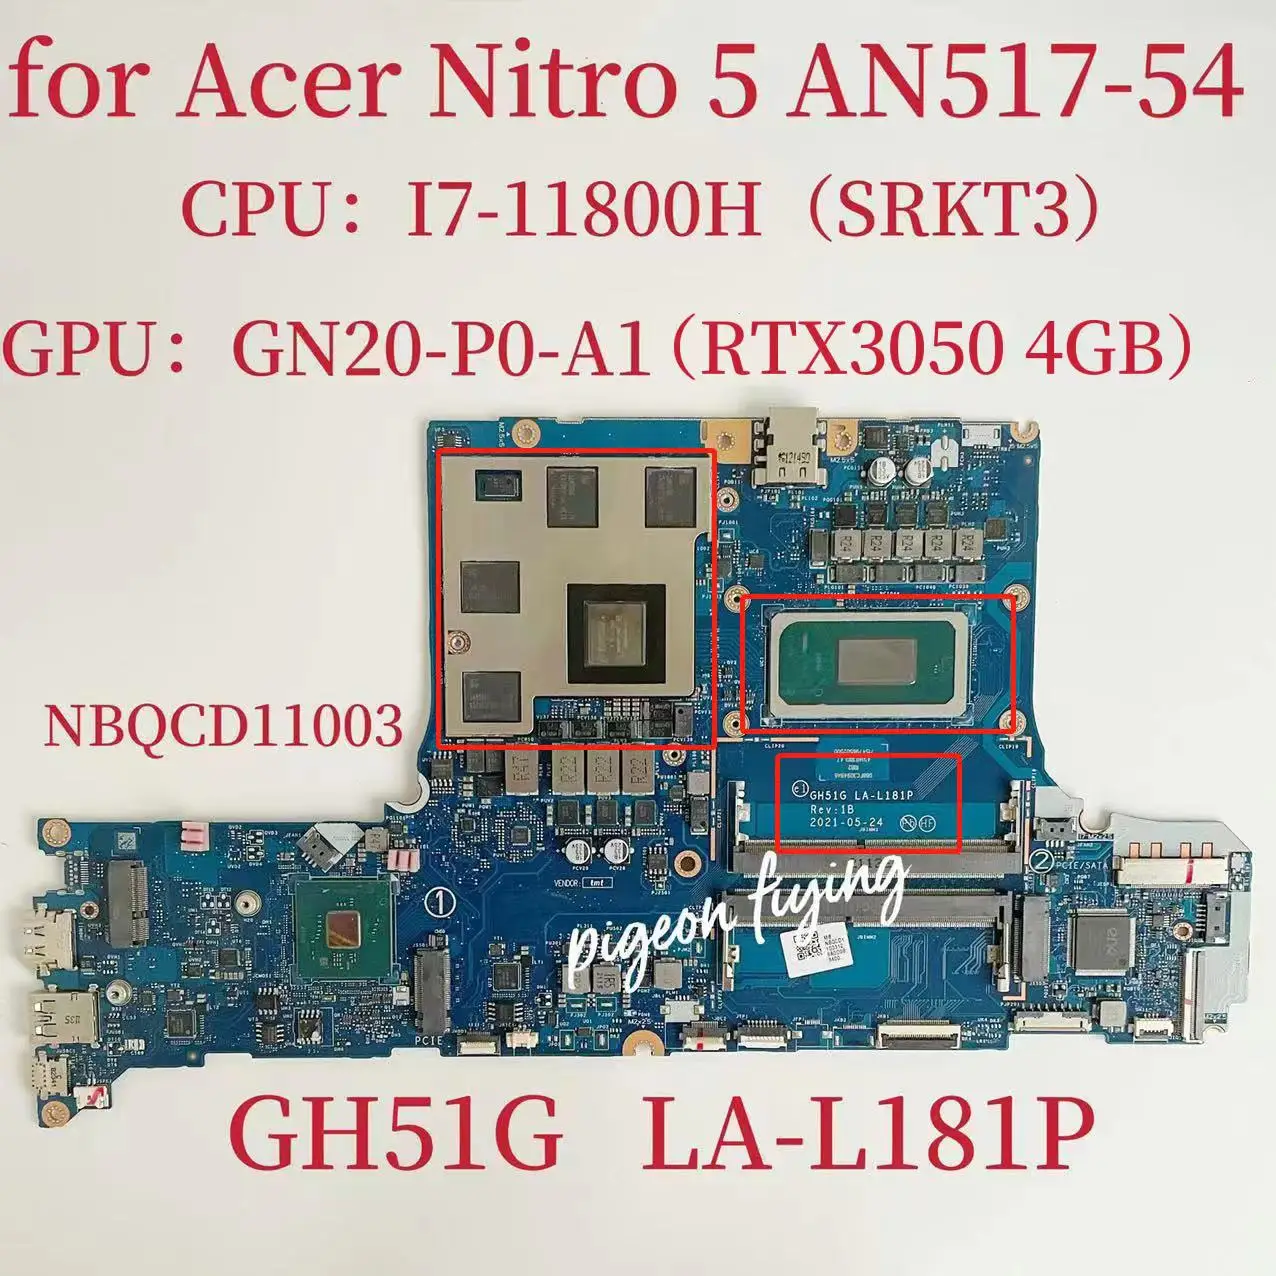 

GH51G LA-L181P Mainboard for Acer Nitro 5 AN517-54 Laptop Motherboard CPU:I7-11800H SRKT3 GPU:GN20-P0-A1 RTX3050 4GB Test OK